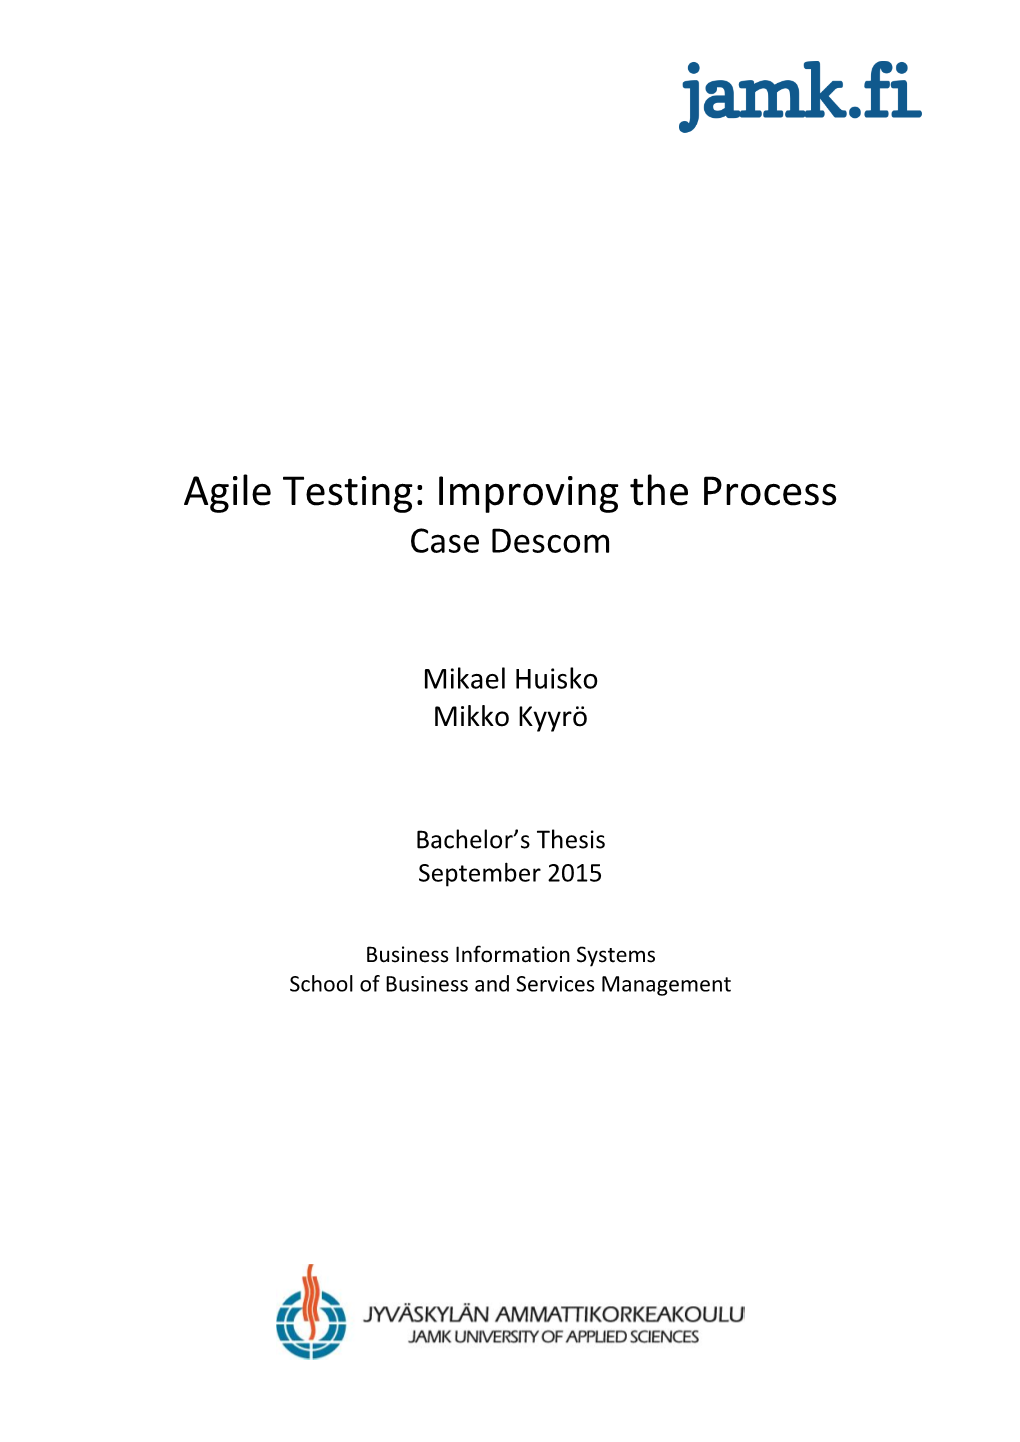 Agile Testing: Improving the Process Case Descom